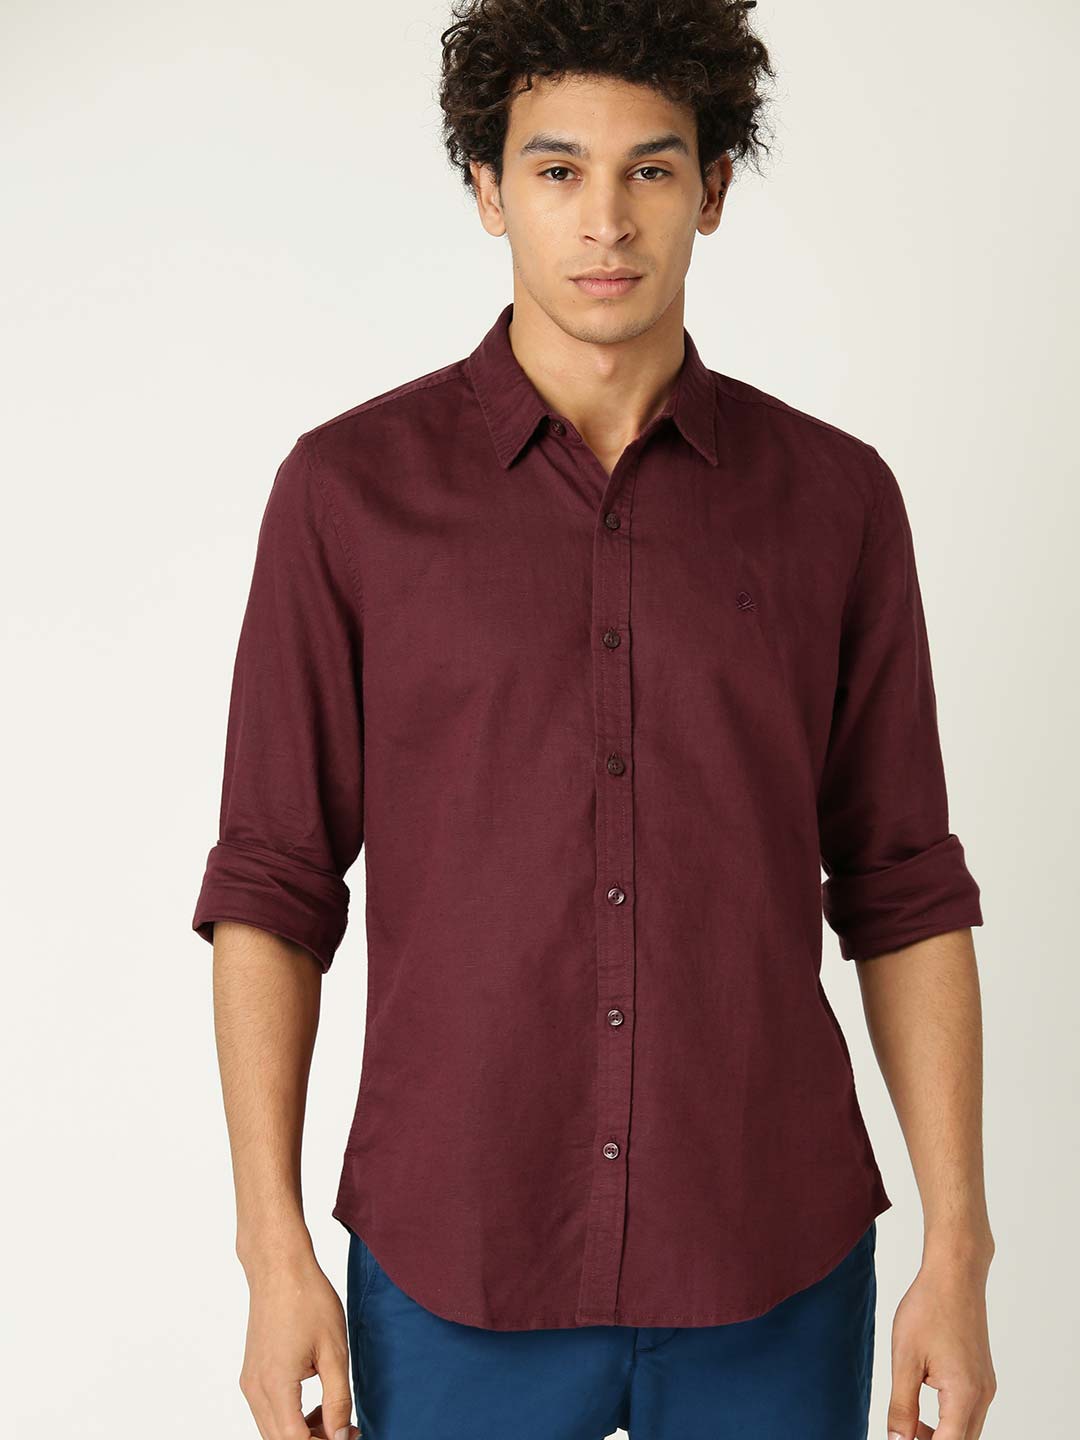 UCB solid maroon color linen shirt - G3 